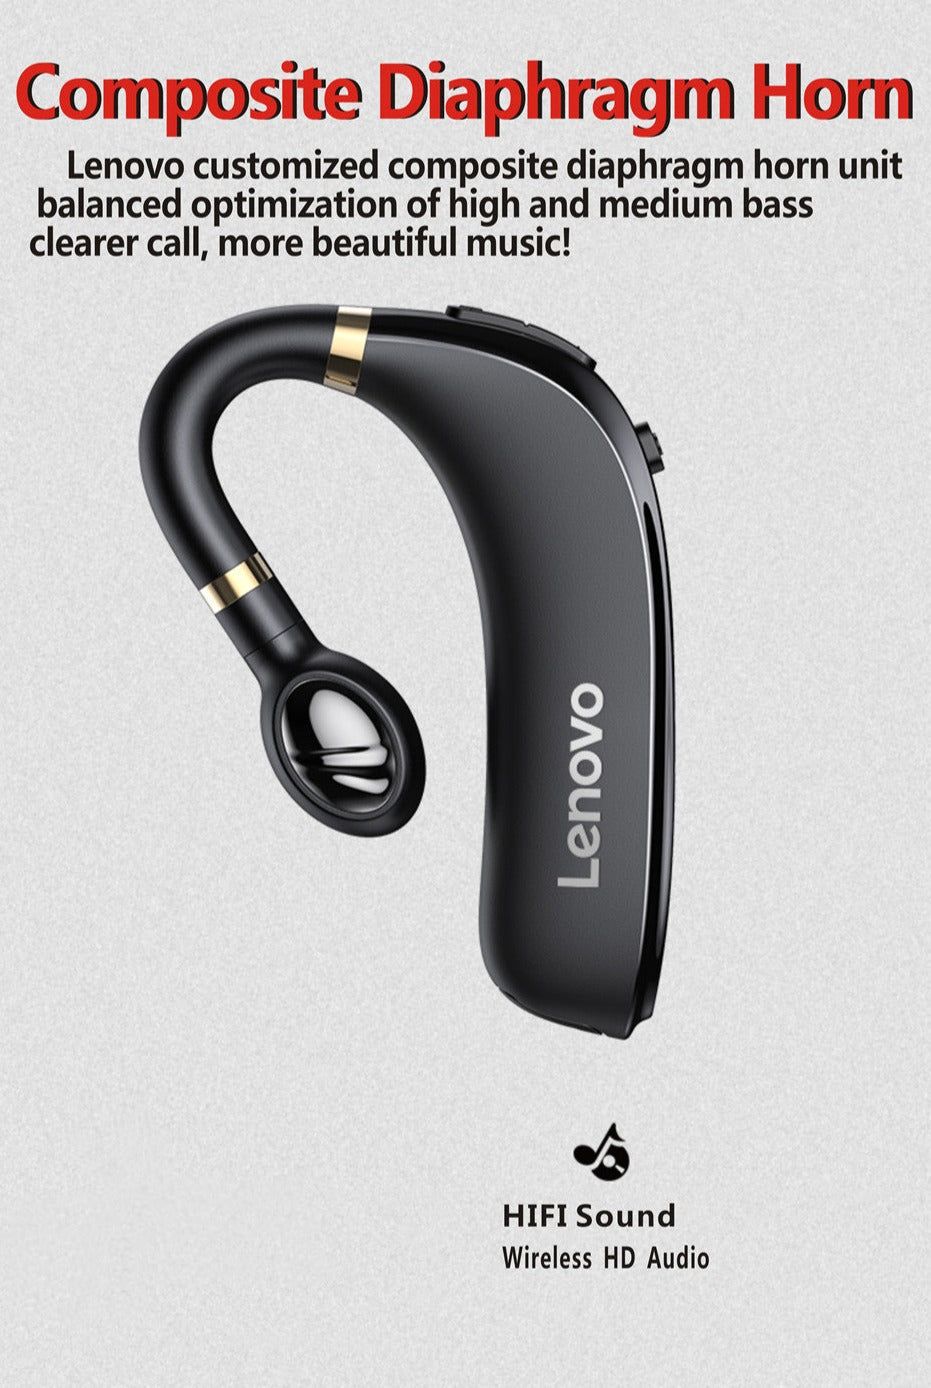 HX106 Bluetooth Earphone with Ear Hook | Hifi Media Store